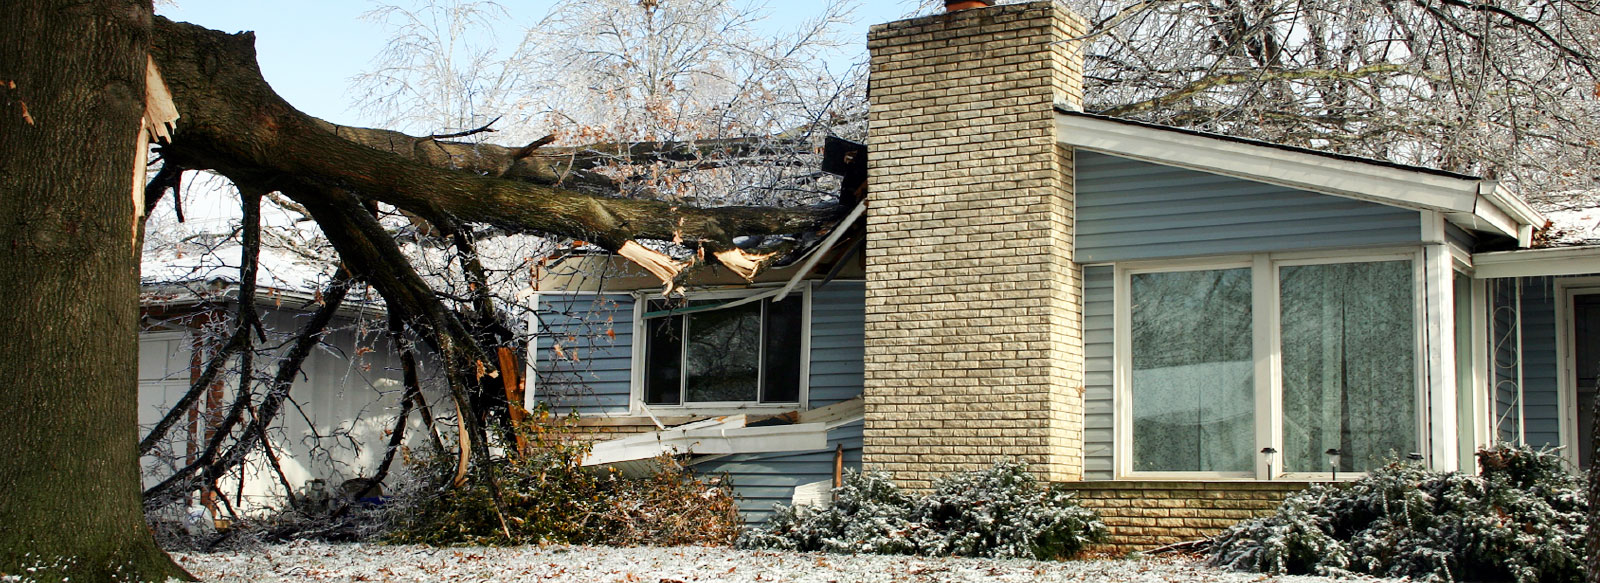 homeowners-insurance-claims.jpg